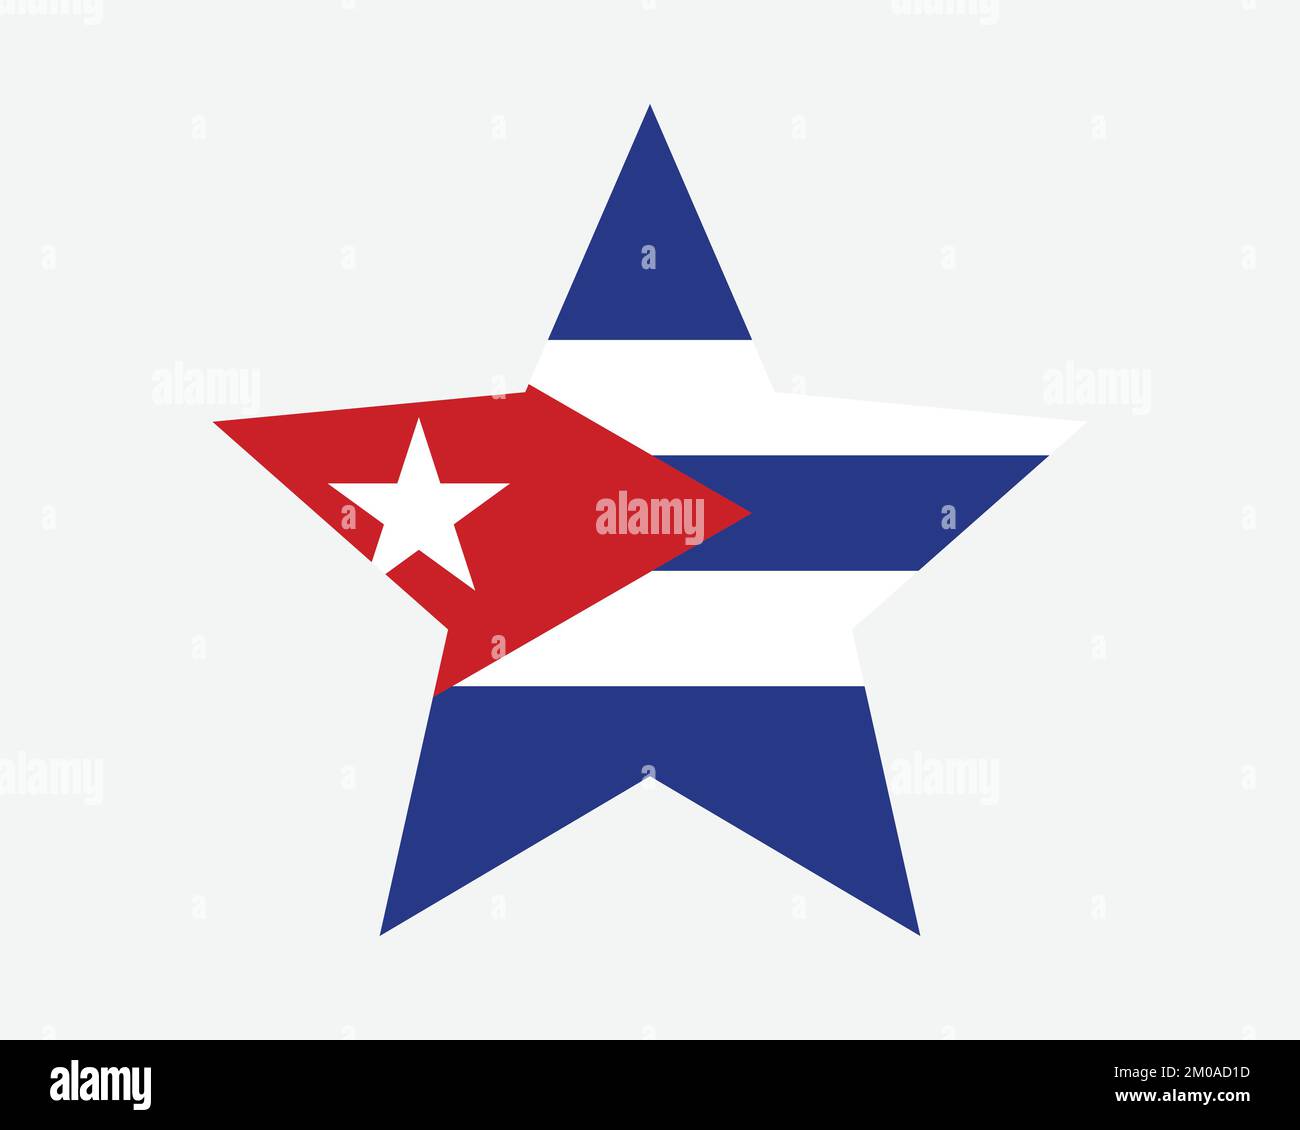 Cuba Star Flag. Cuban Star Shape Flag. Republic of Cuba Country National Banner Icon Symbol Vector 2D Flat Artwork Graphic Illustration Stock Vector